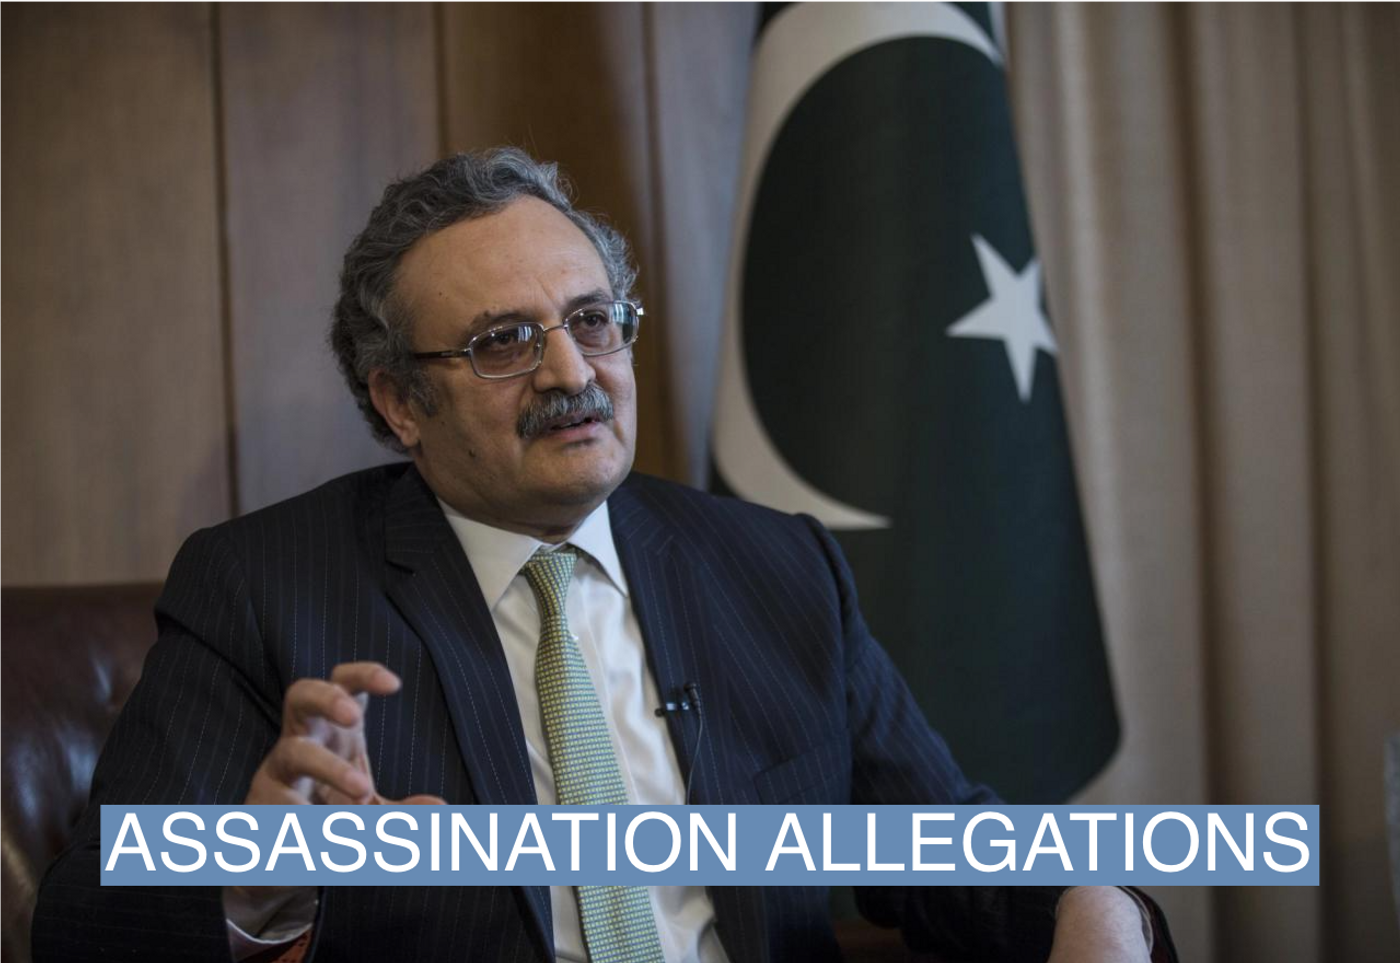 Ambassador of Pakistan to Turkey, Syrus Sajjad Qazi speaks during an exclusive interview in Ankara, Turkey on March 14, 2019